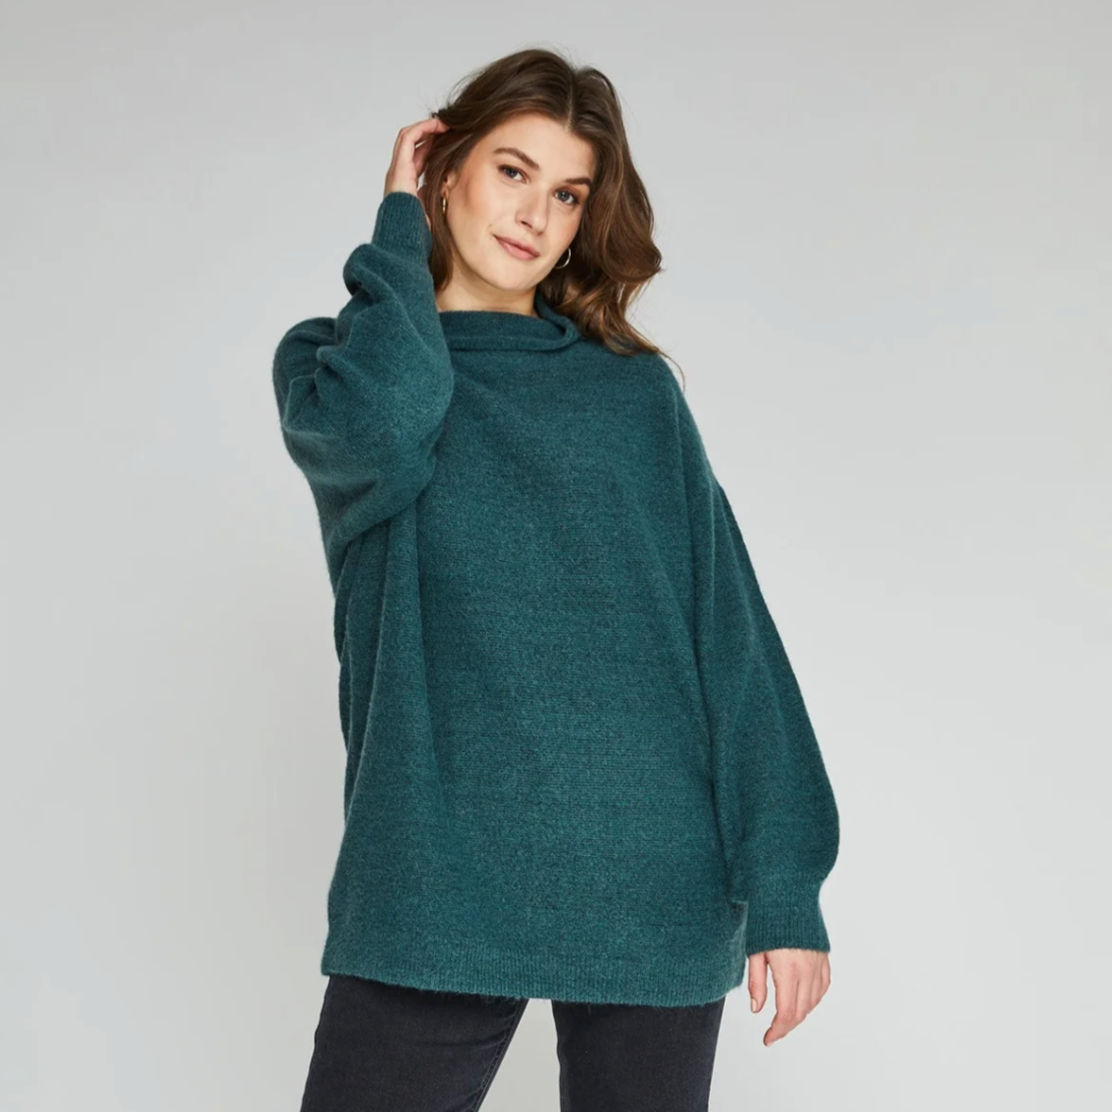 Jones Pullover Sweater